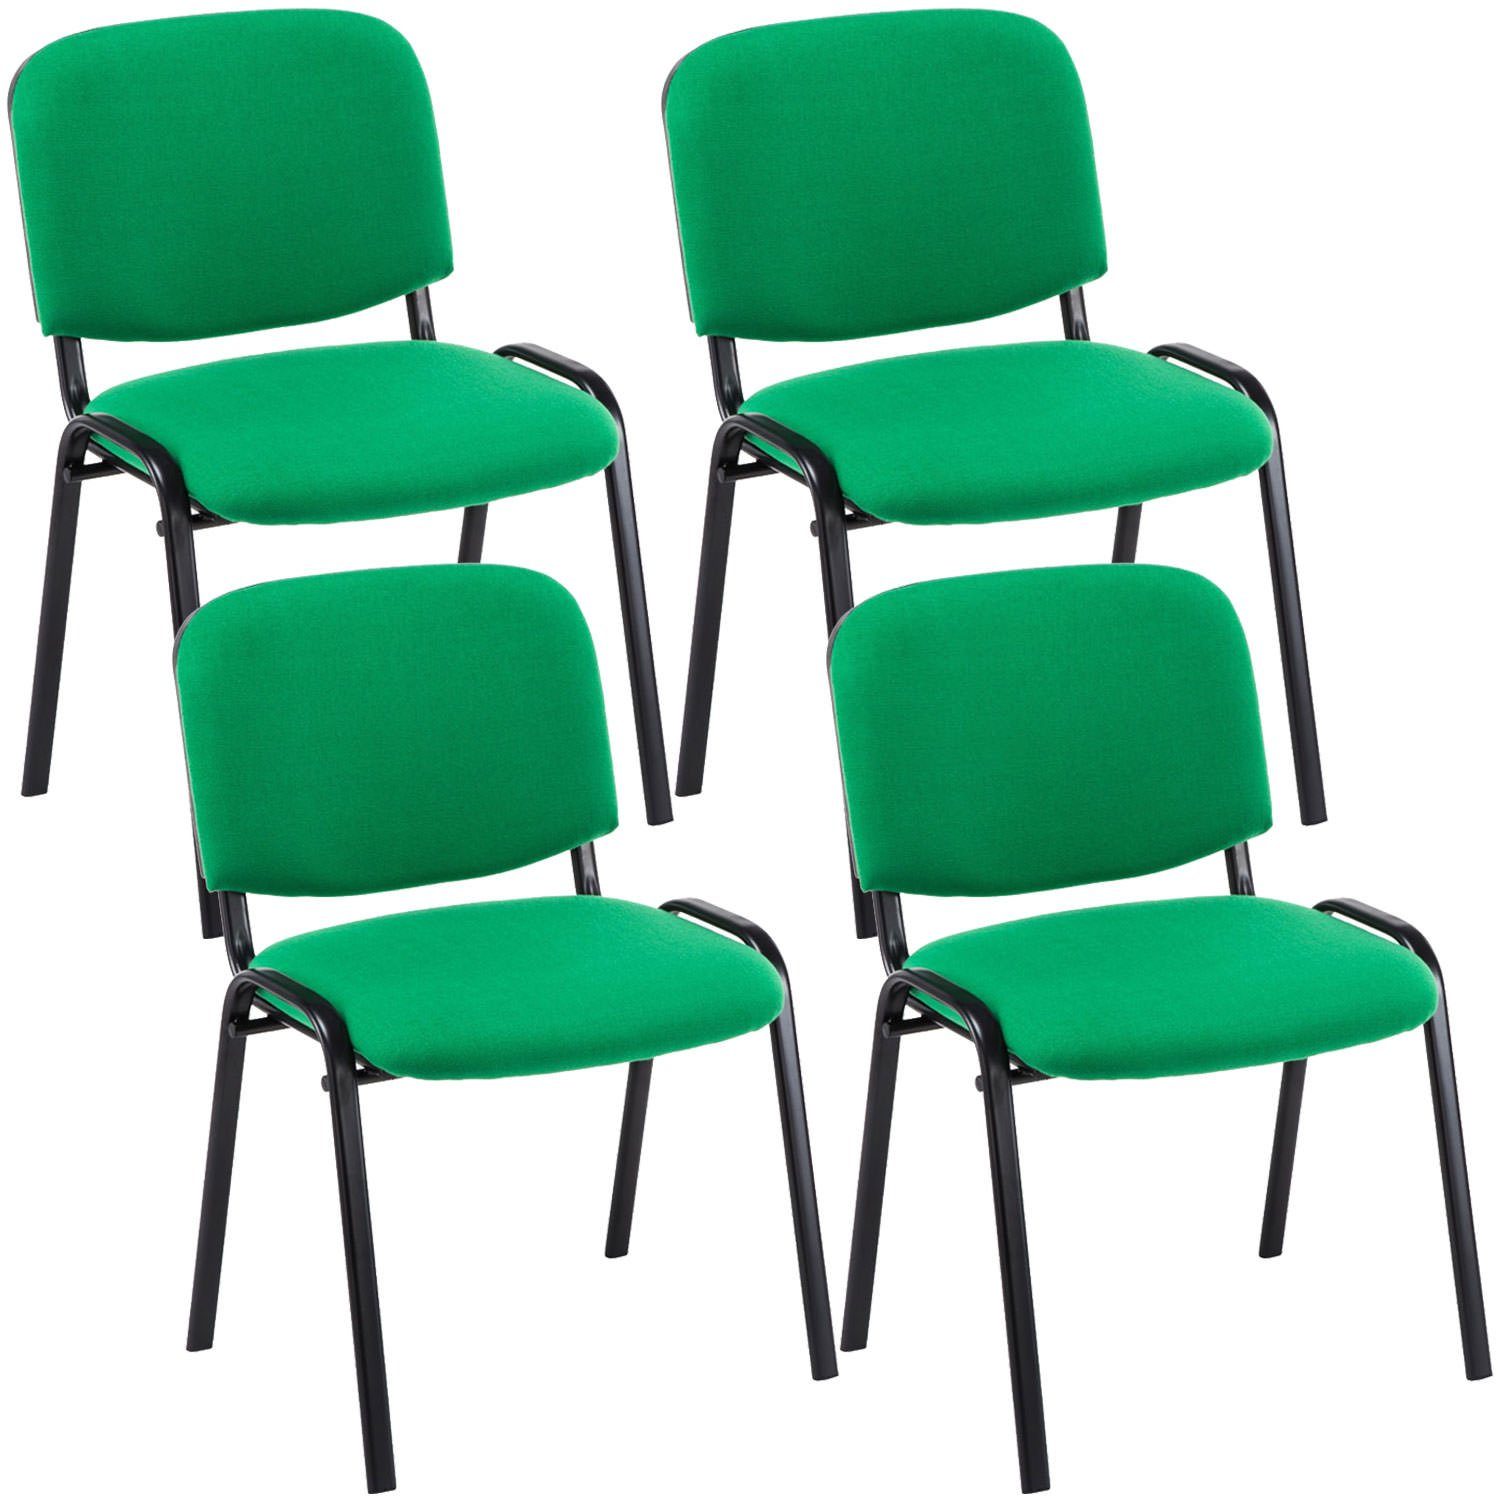 St), - - Stoff 4 Messestuhl, (Besprechungsstuhl schwarz TPFLiving Warteraumstuhl Sitzfläche: - Gestell: - mit Polsterung grün Metall hochwertiger Konferenzstuhl Besucherstuhl Keen